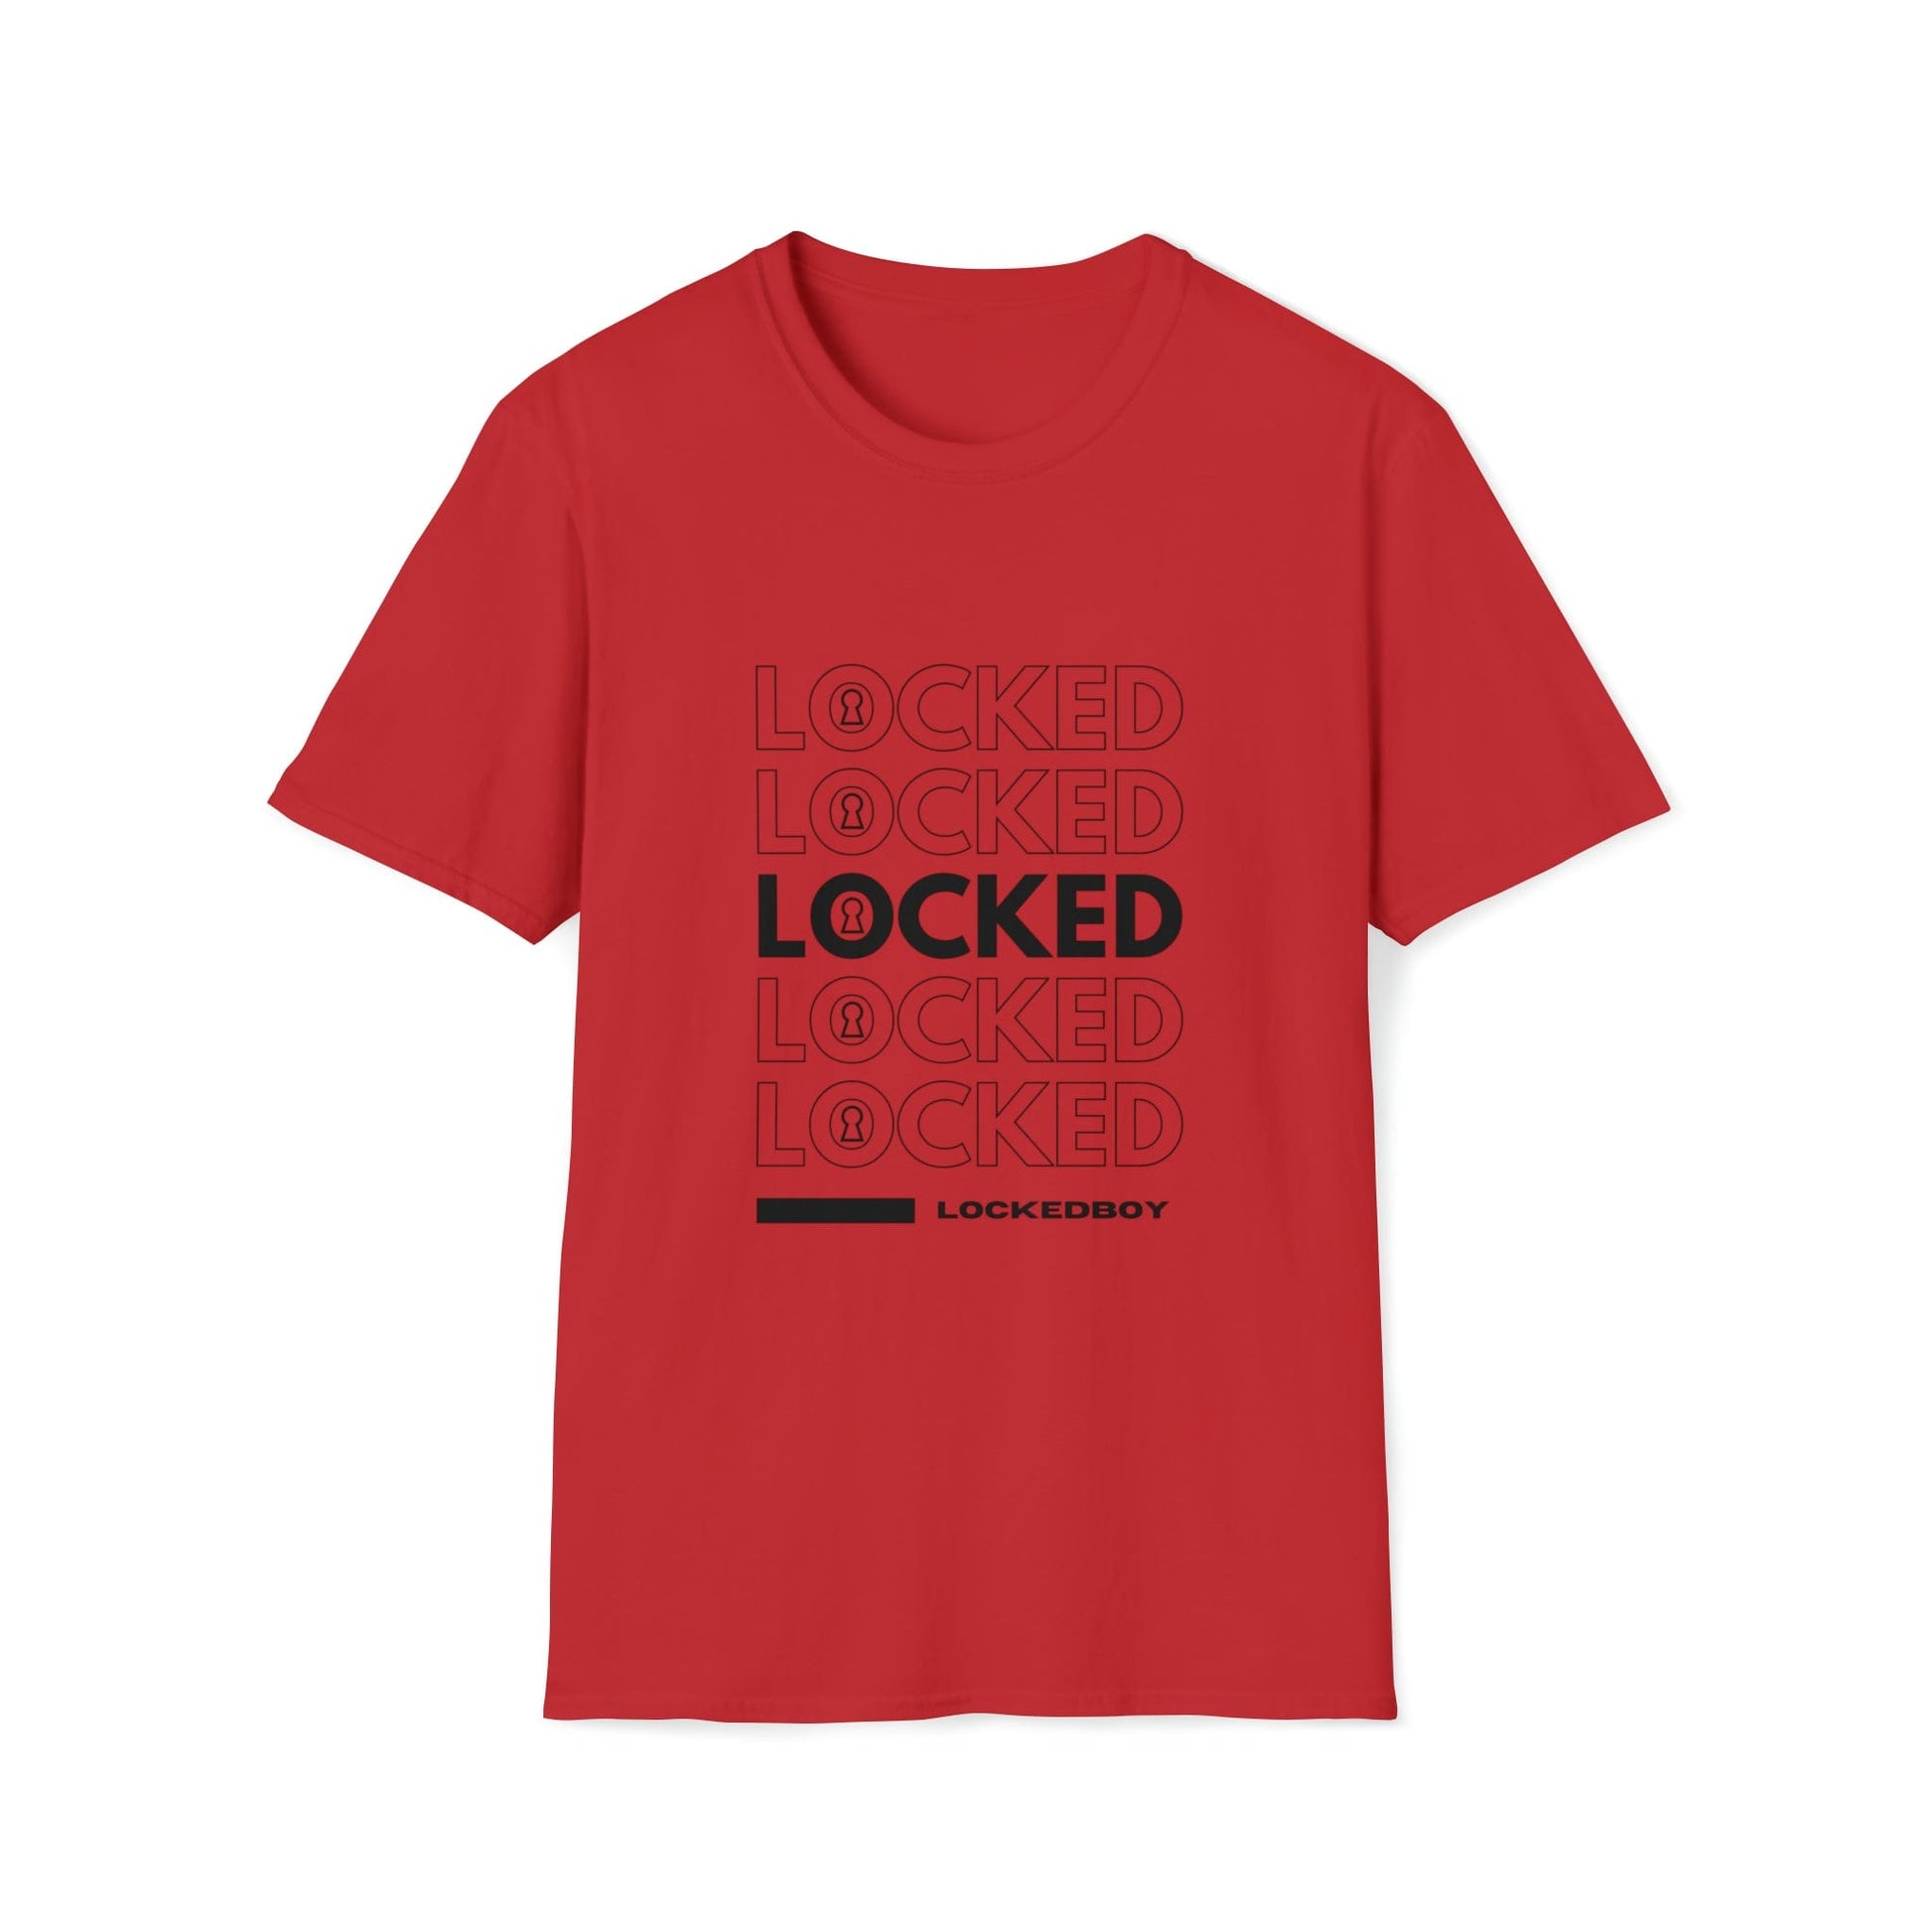 T-Shirt Red / S LOCKED Inspo (black text) - Chastity Shirts by LockedBoy Athletics LEATHERDADDY BATOR